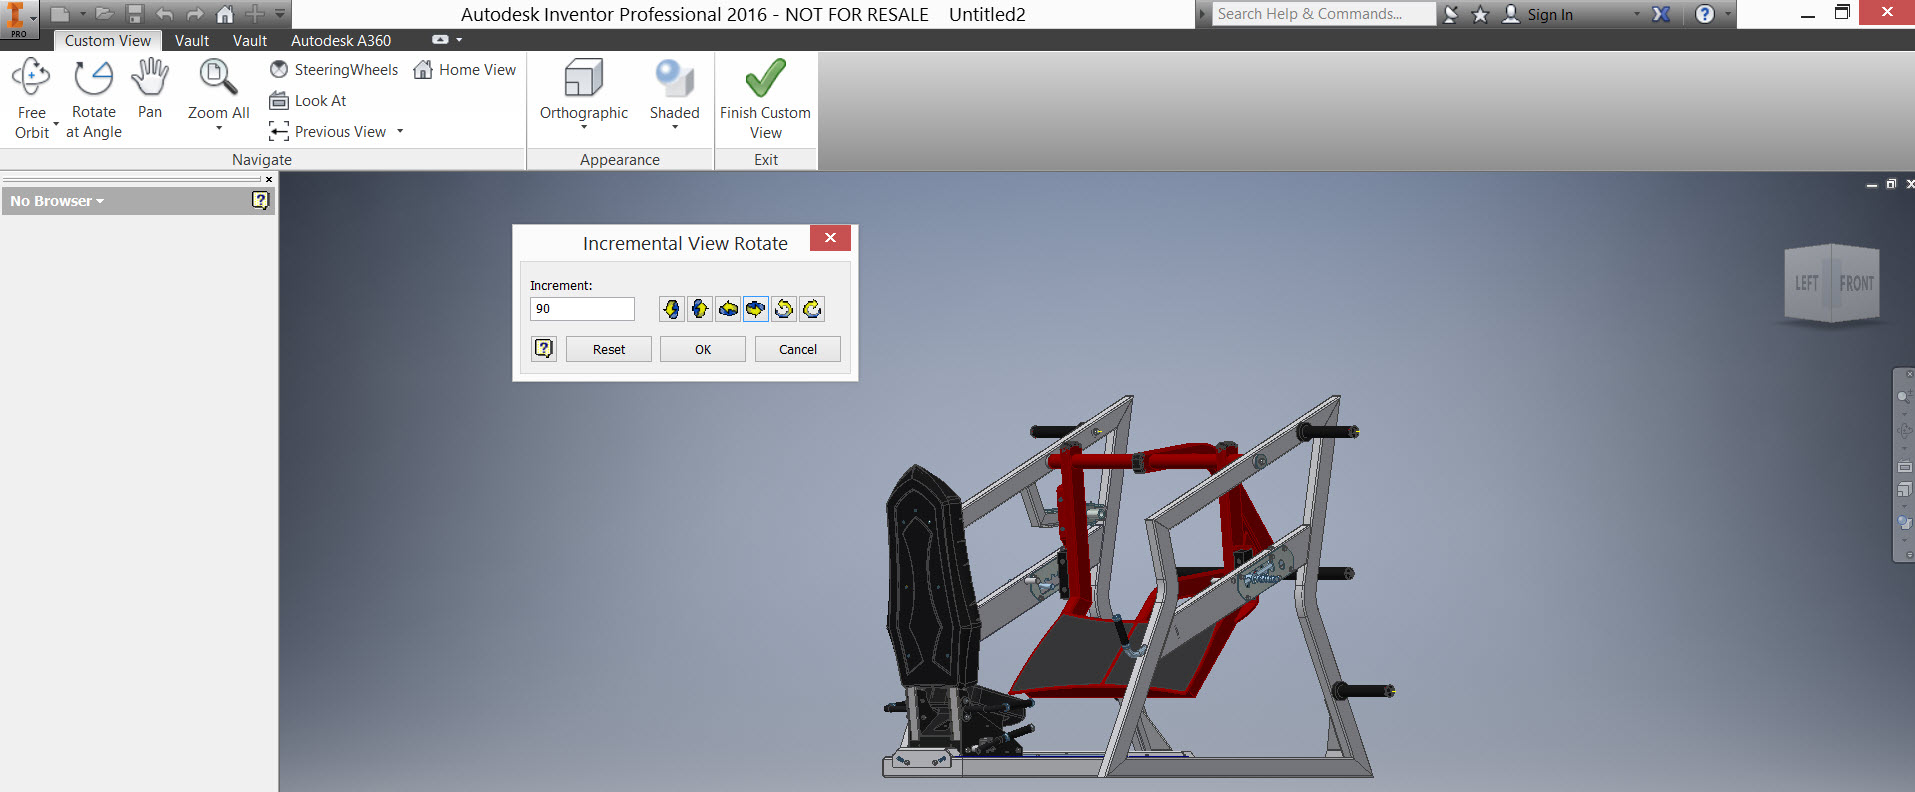 Buy Autodesk Algor Simulation Professional 2011 key